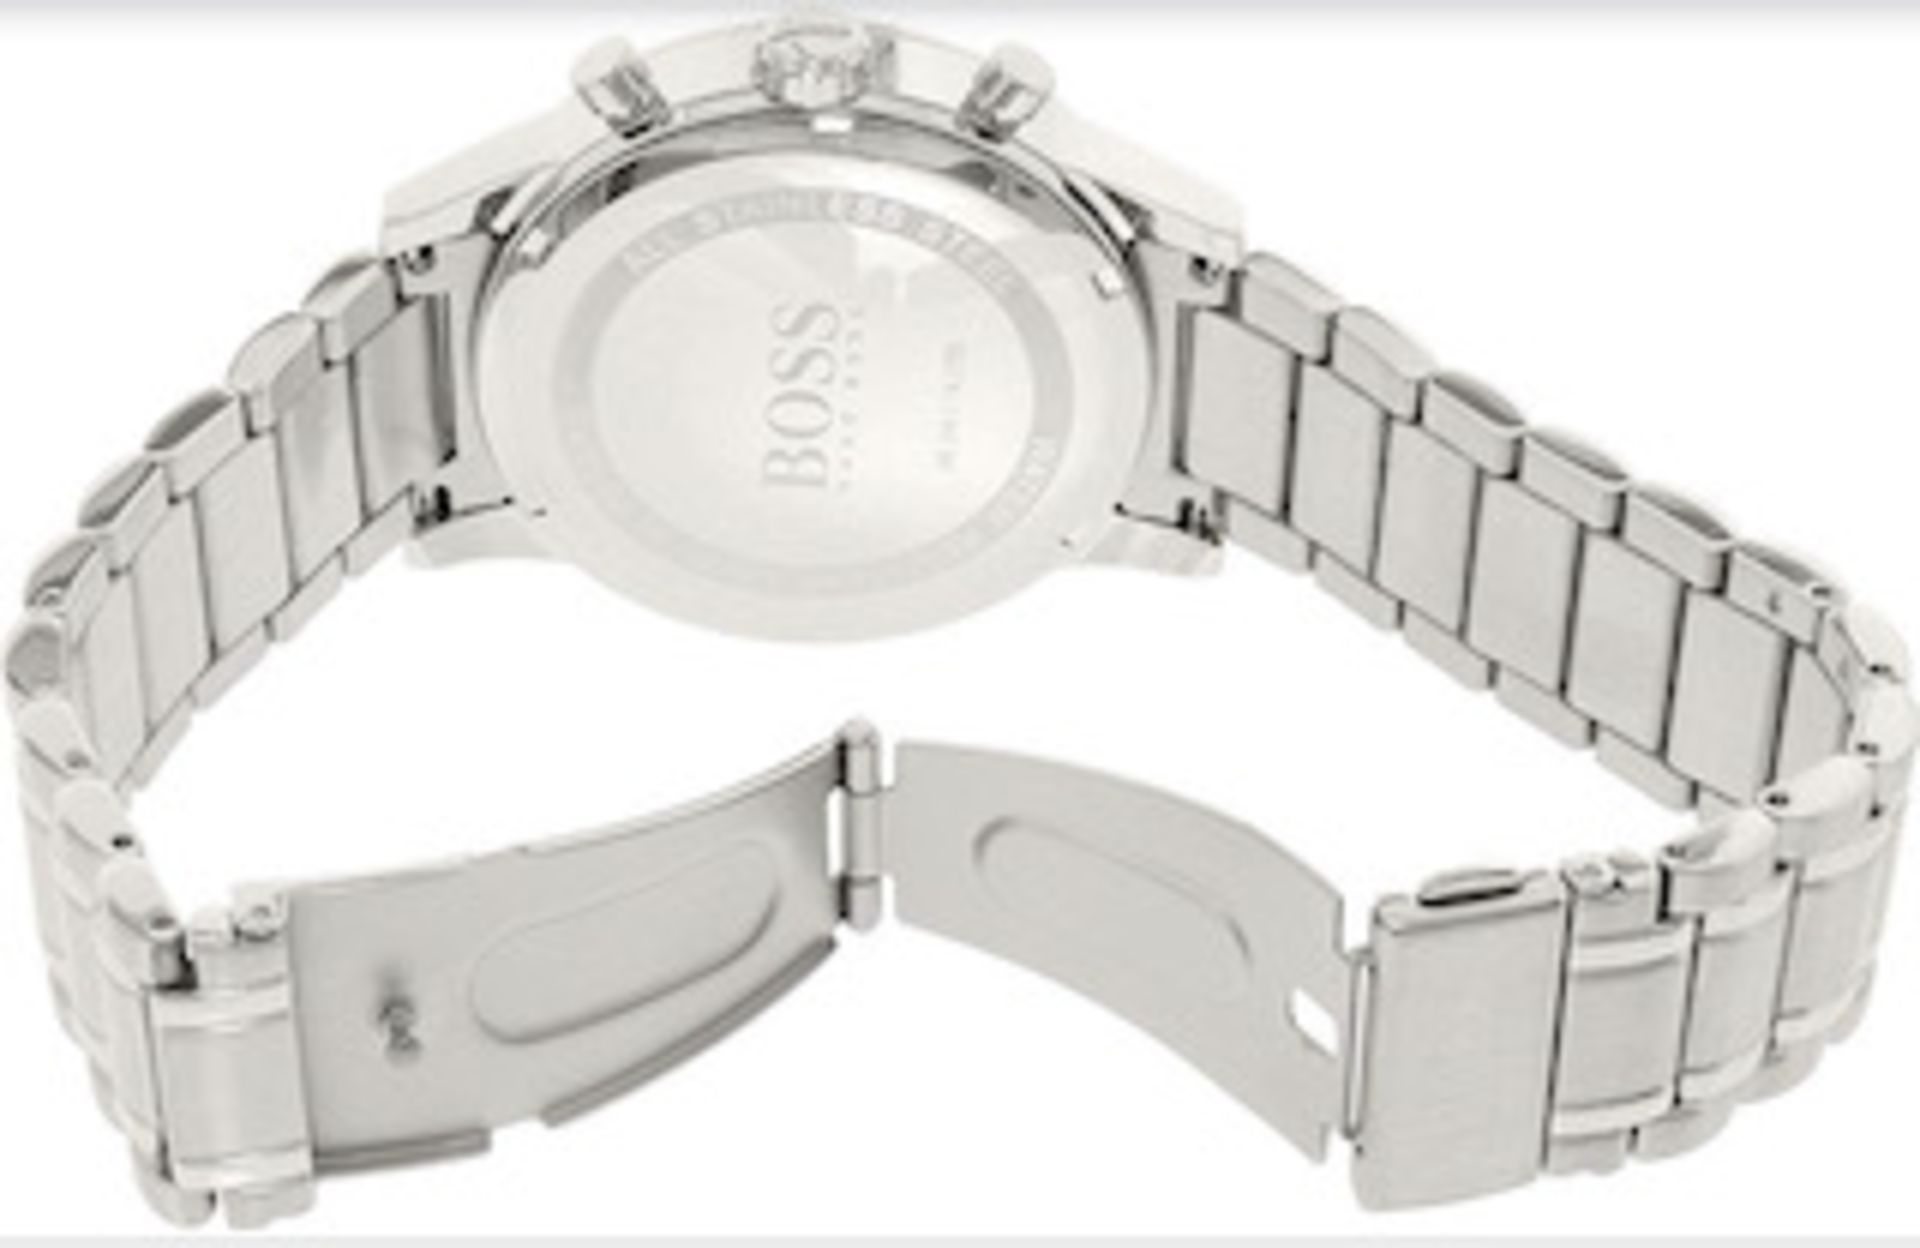 Hugo Boss Men's Aeroliner Silver Bracelet Chronograph Watch 1513182 Authentic Men's Classic - Image 3 of 7